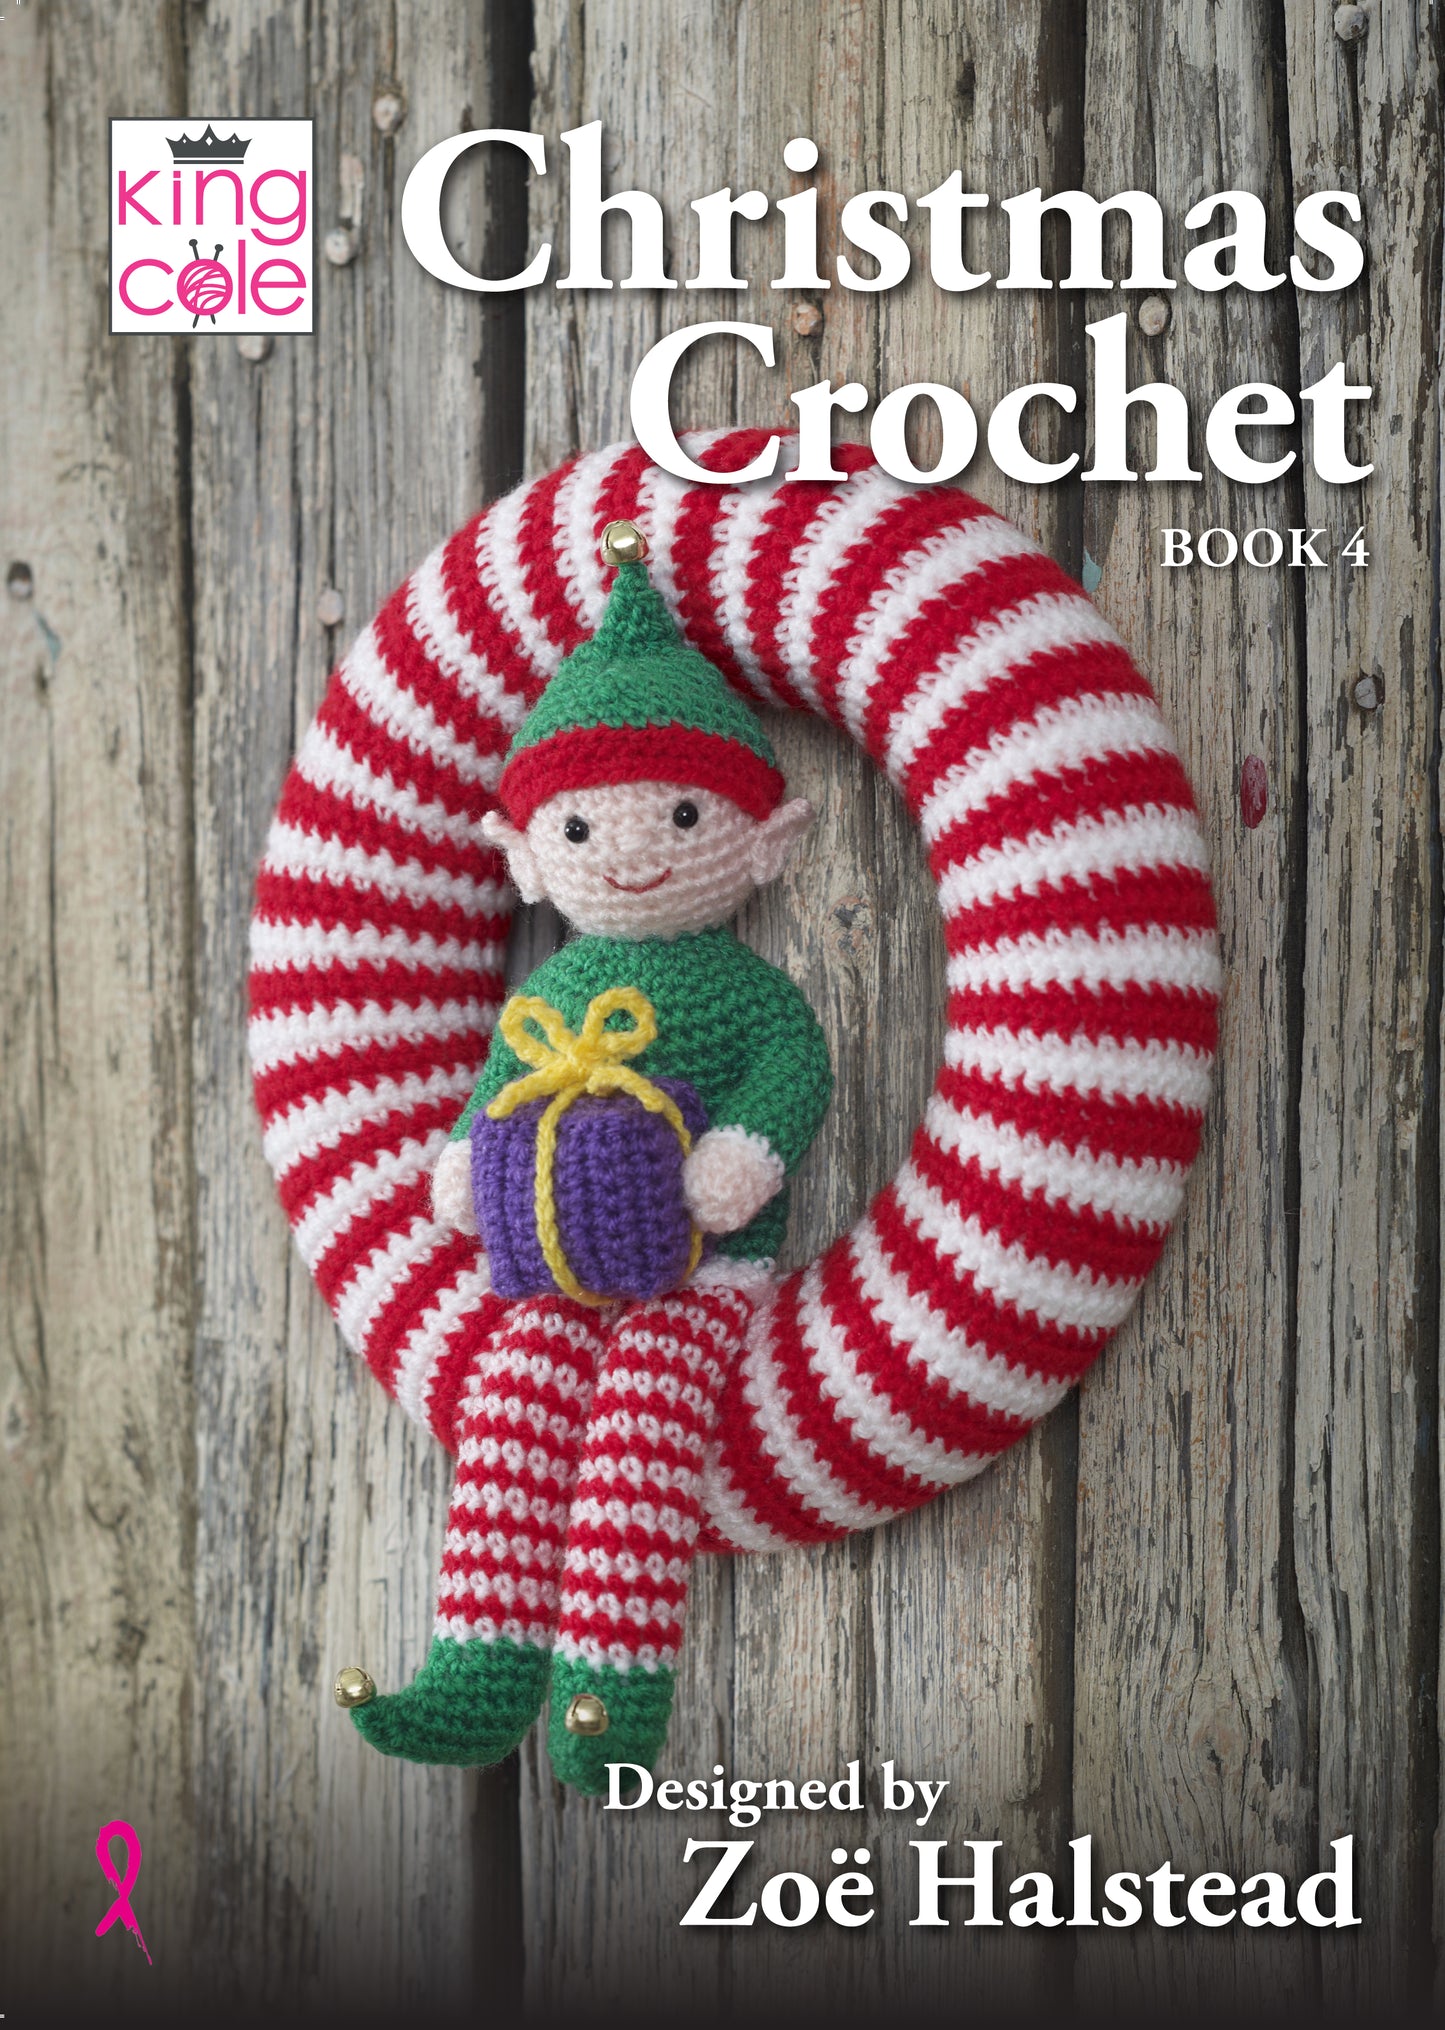 Christmas crochet book 4.